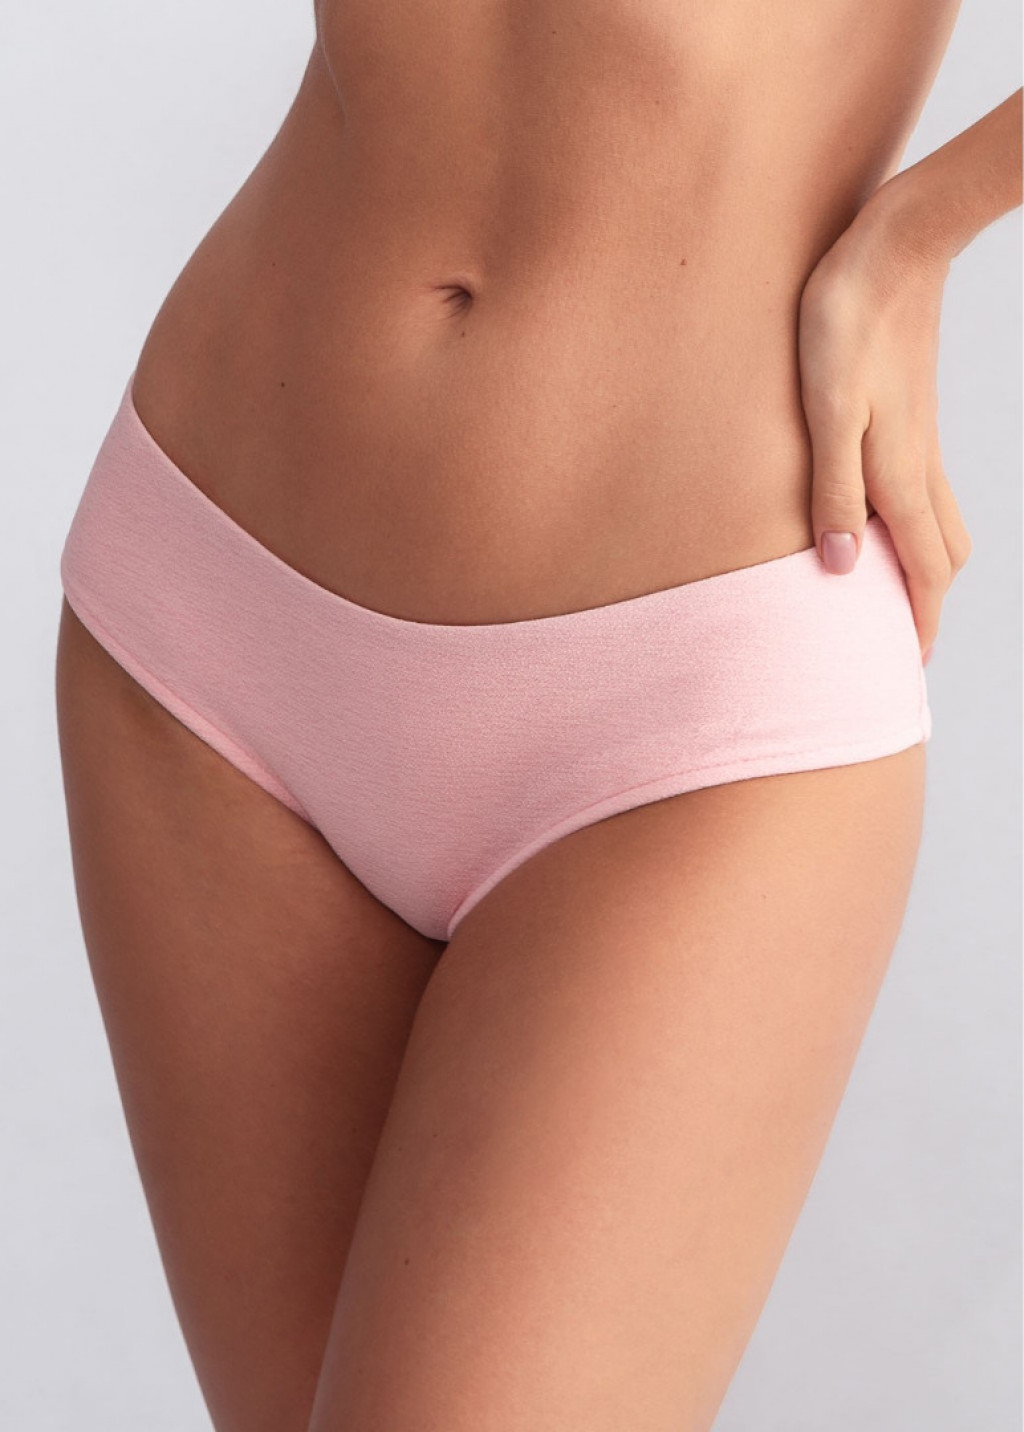 Pink Comfy Bikini Top and Pink Brazilian Bikini Bottom